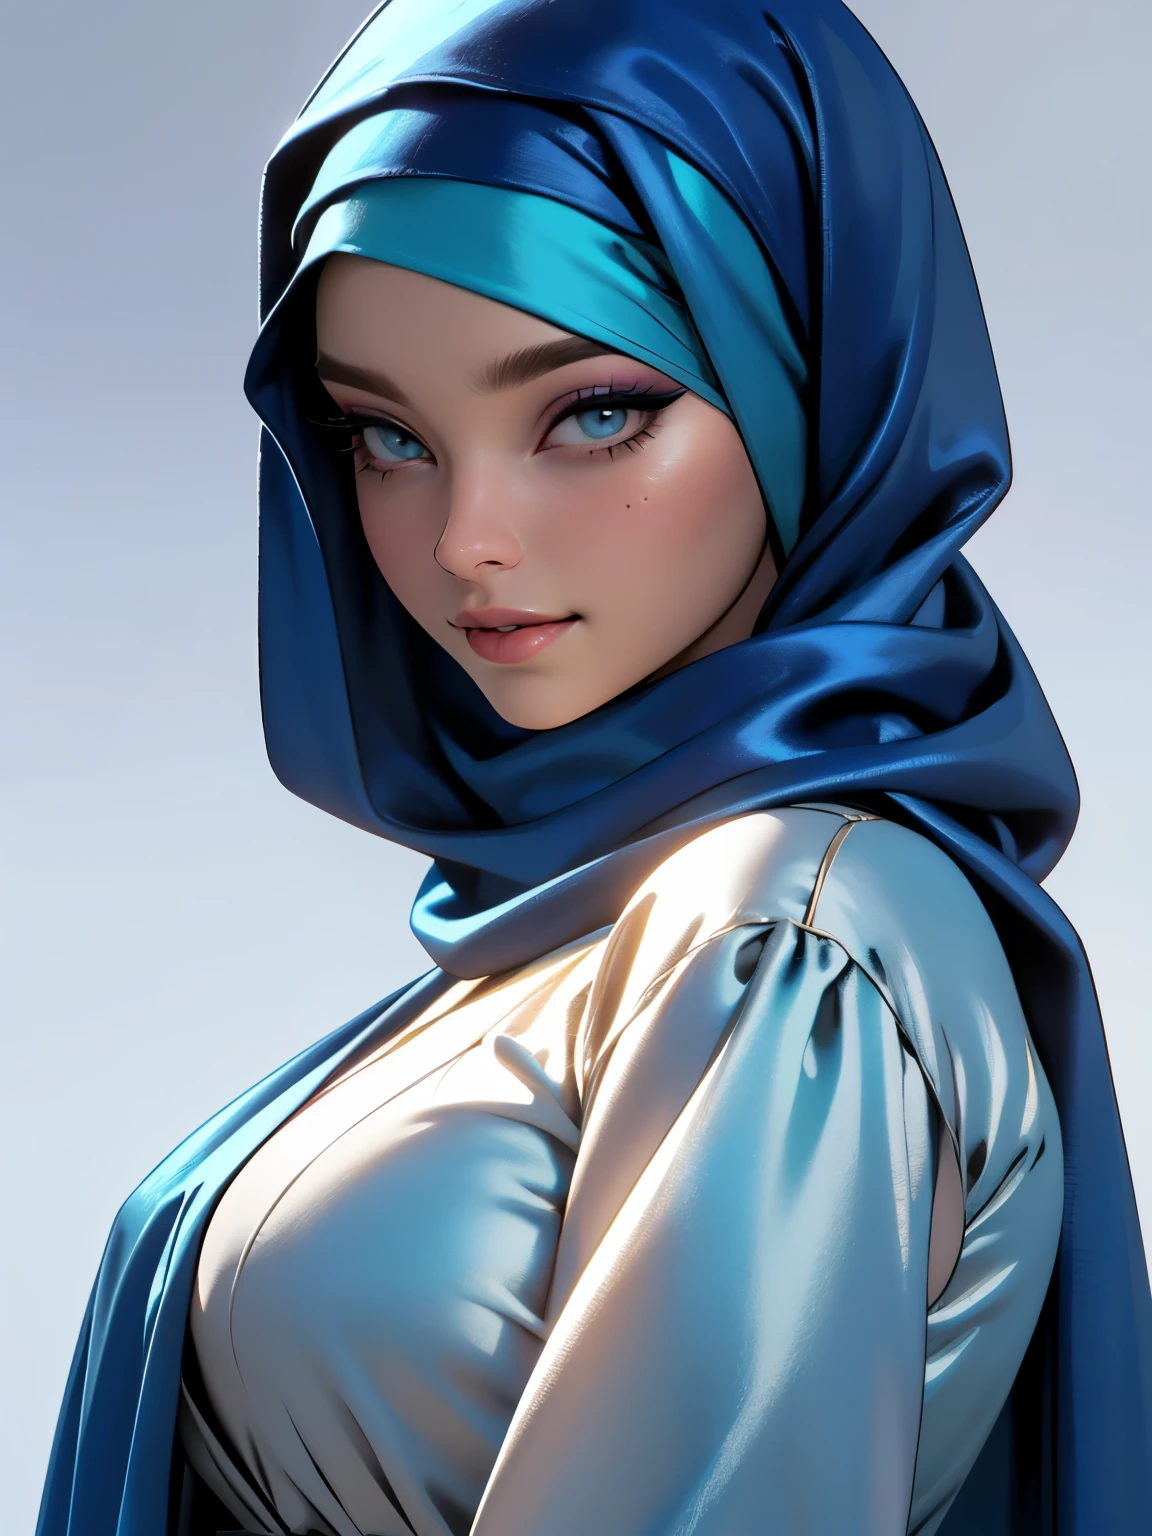 3dmm風格, (傑作), 實際的, 最好的品質, 最佳照明, 非常詳細的artgerm, 風格藝術傑姆, 美麗的成熟女人, 1 女孩單獨照片, 美麗的妝容, 眼影, 張開雙唇, 細緻的眼睛, ((美麗的大眼睛)), 長長的睫毛, 臉頰上有酒窩, 微笑, 戴絲綢蓋頭, ((Dark blue 緞 hijab)), 寬鬆潮頭巾風格, 閃亮的絲綢, 緞, blue 緞, ((Blue 緞 shirt and 緞 long skirt)), (特寫肖像), 正視圖, 站立對稱中心, 面向觀眾, 灰色背景.